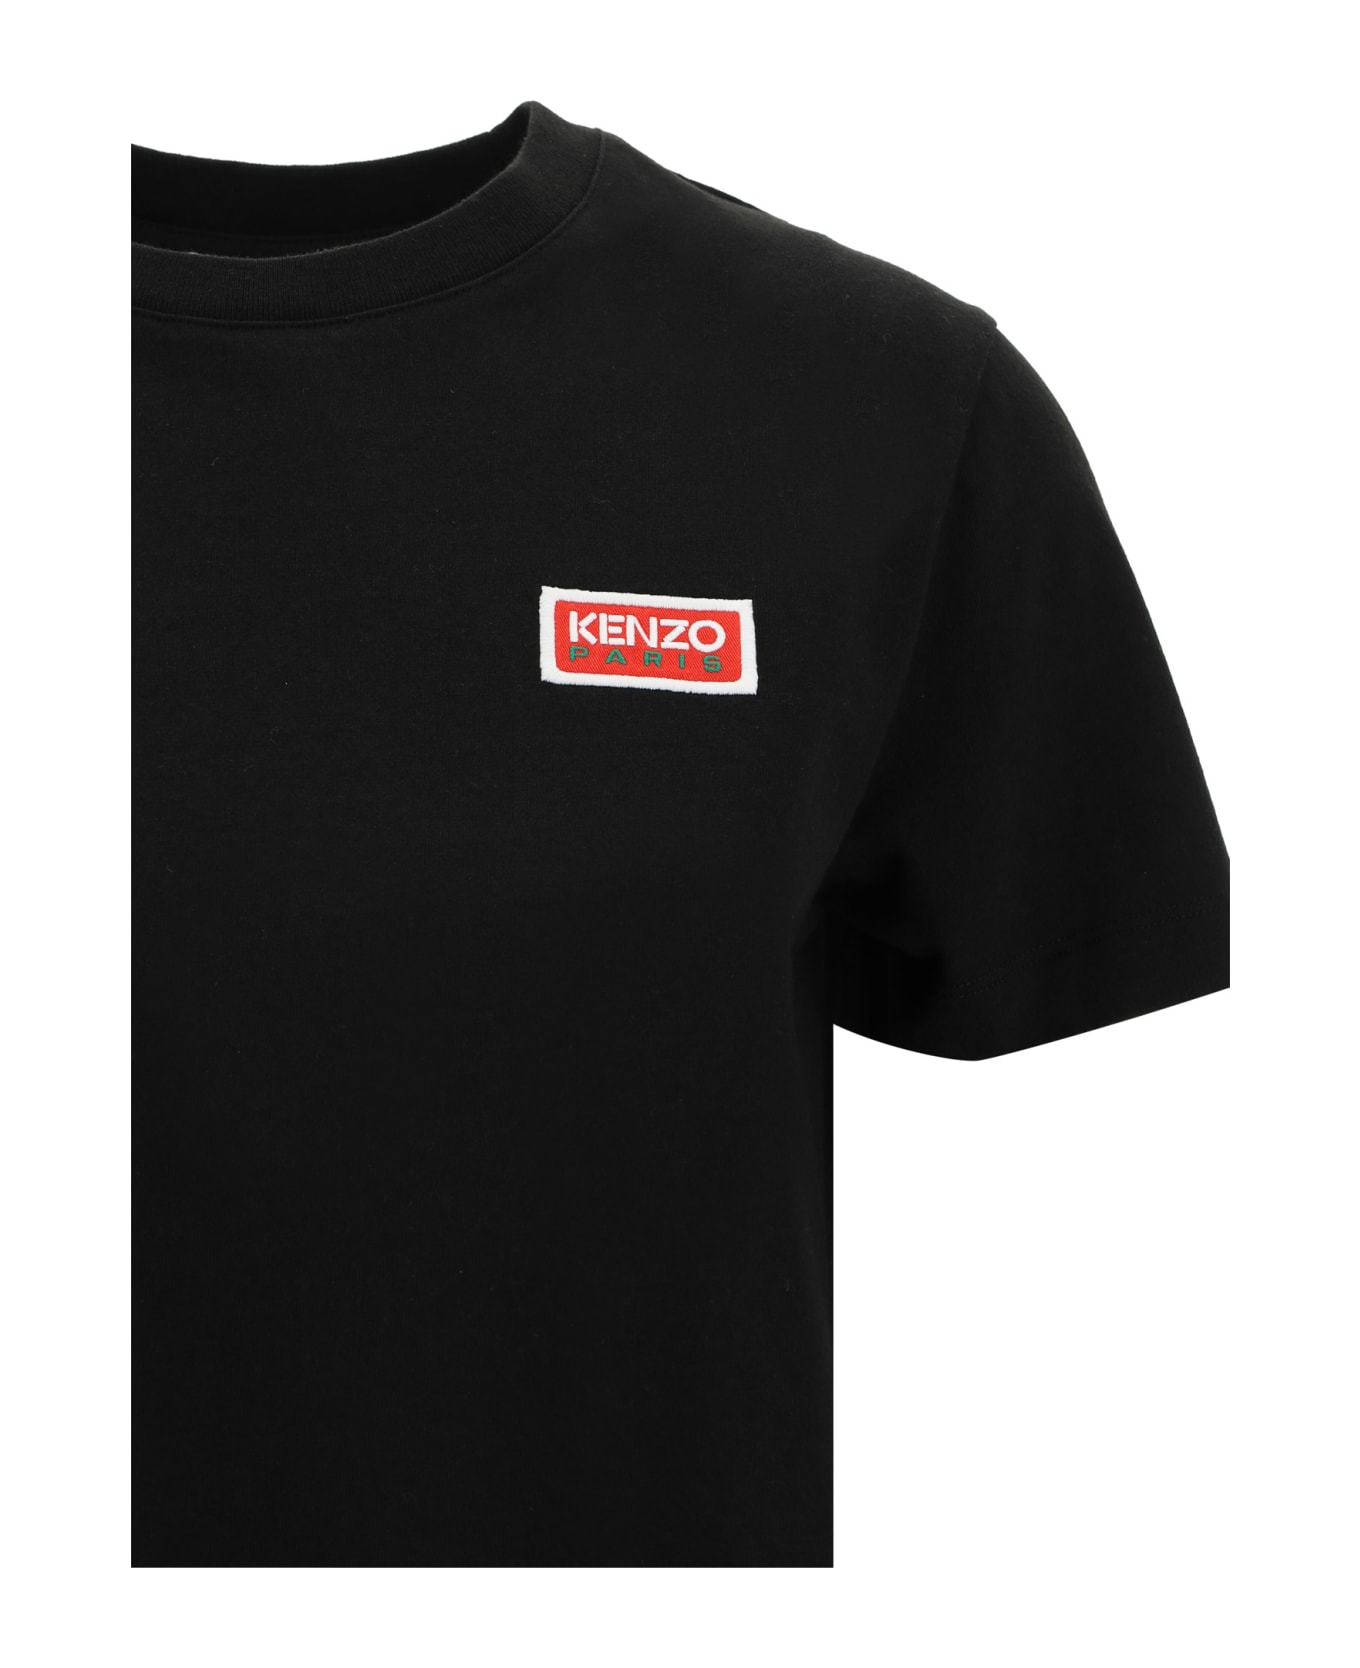 Kenzo Black Cotton T-shirt - Noir